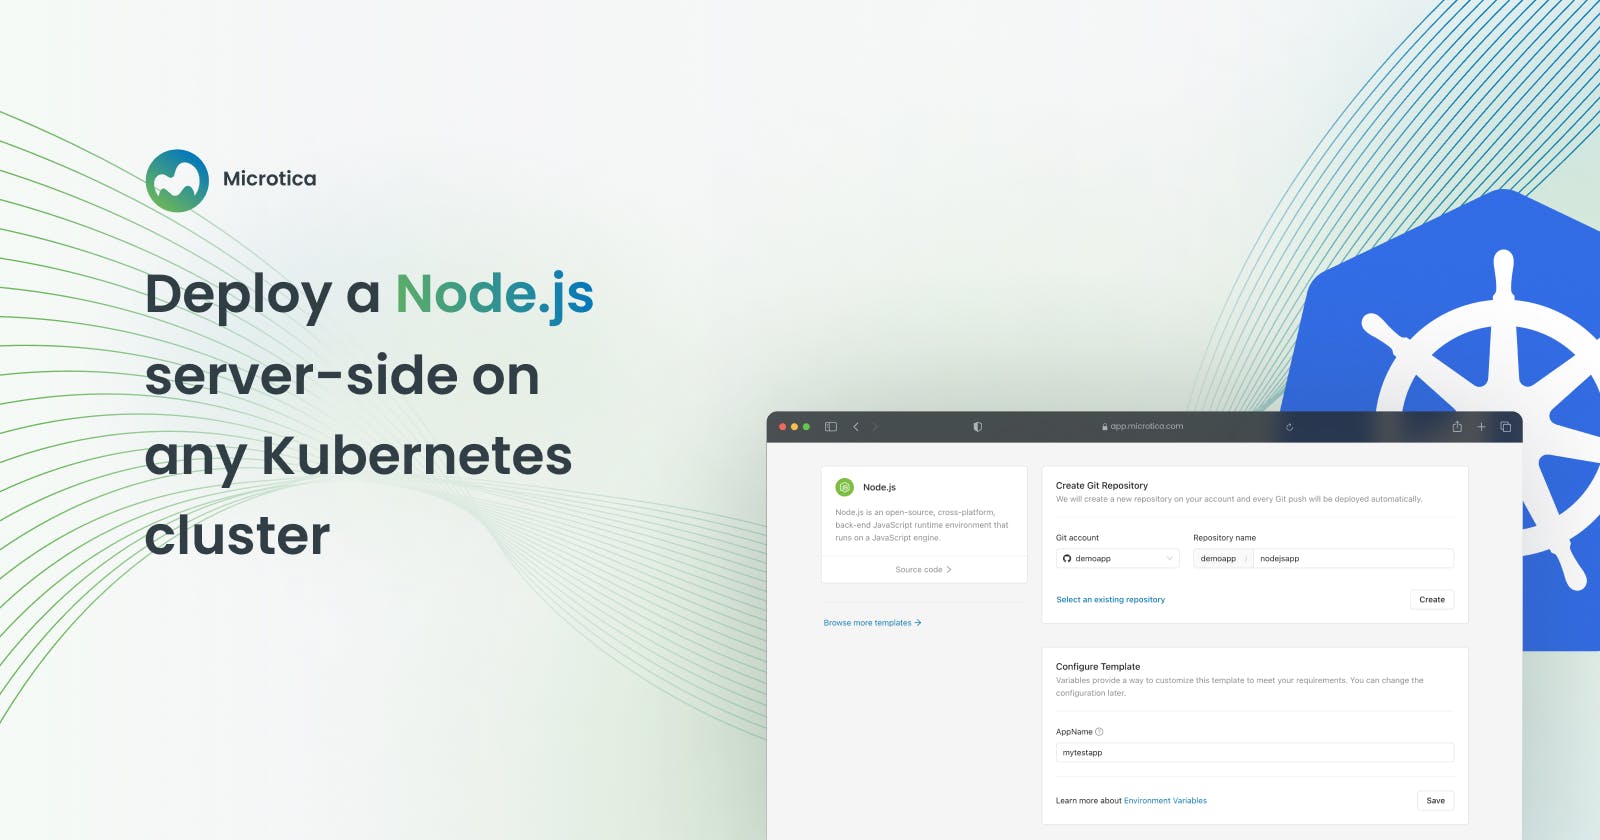 How to deploy a Node.js server-side application on any Kubernetes cluster